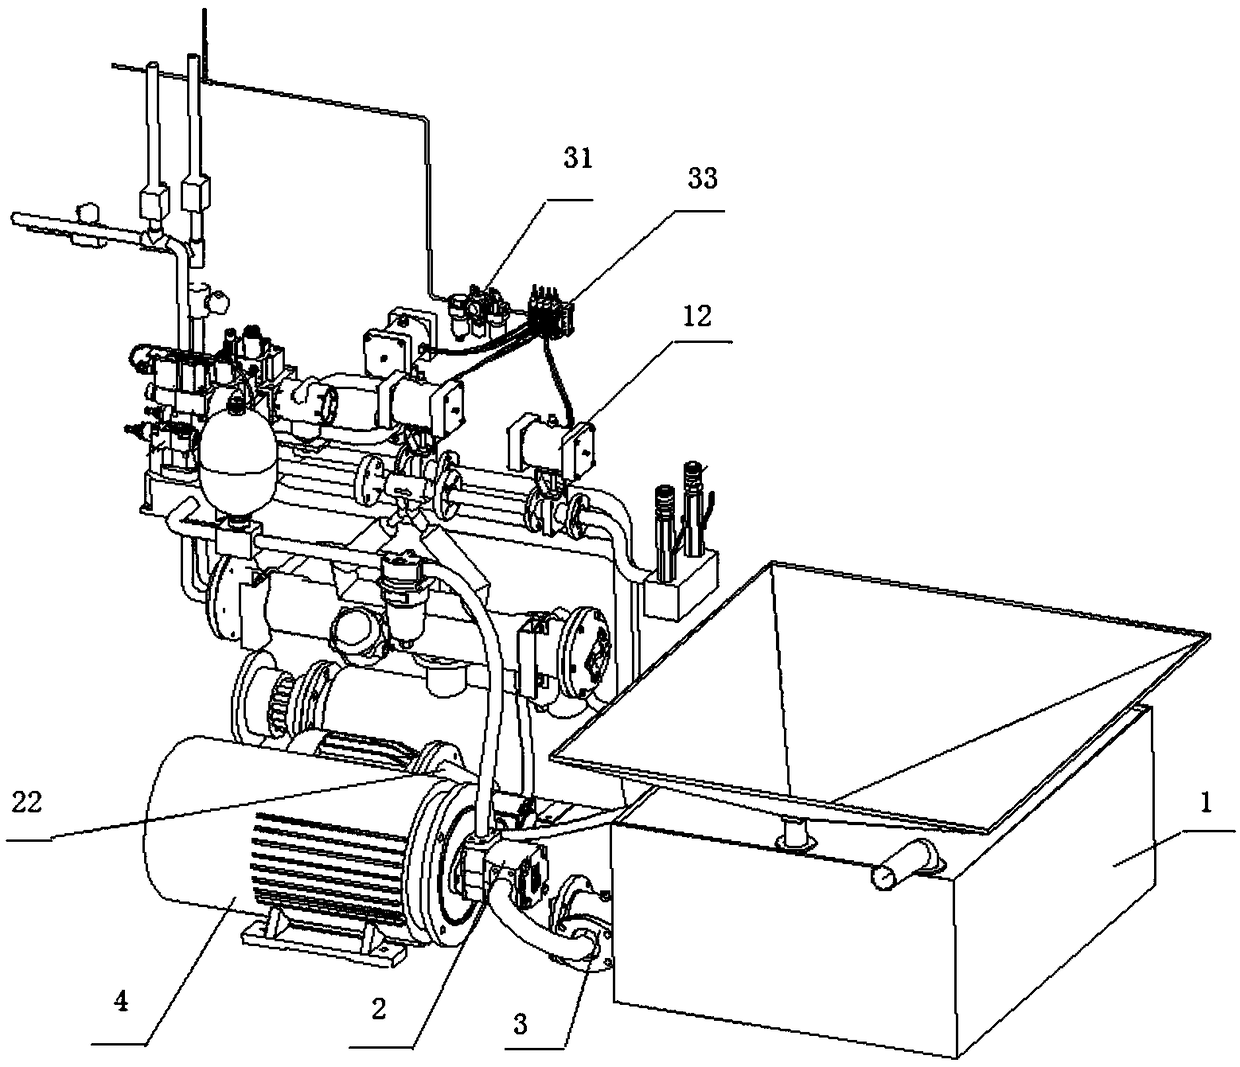 Automatic transmission valve body detection system